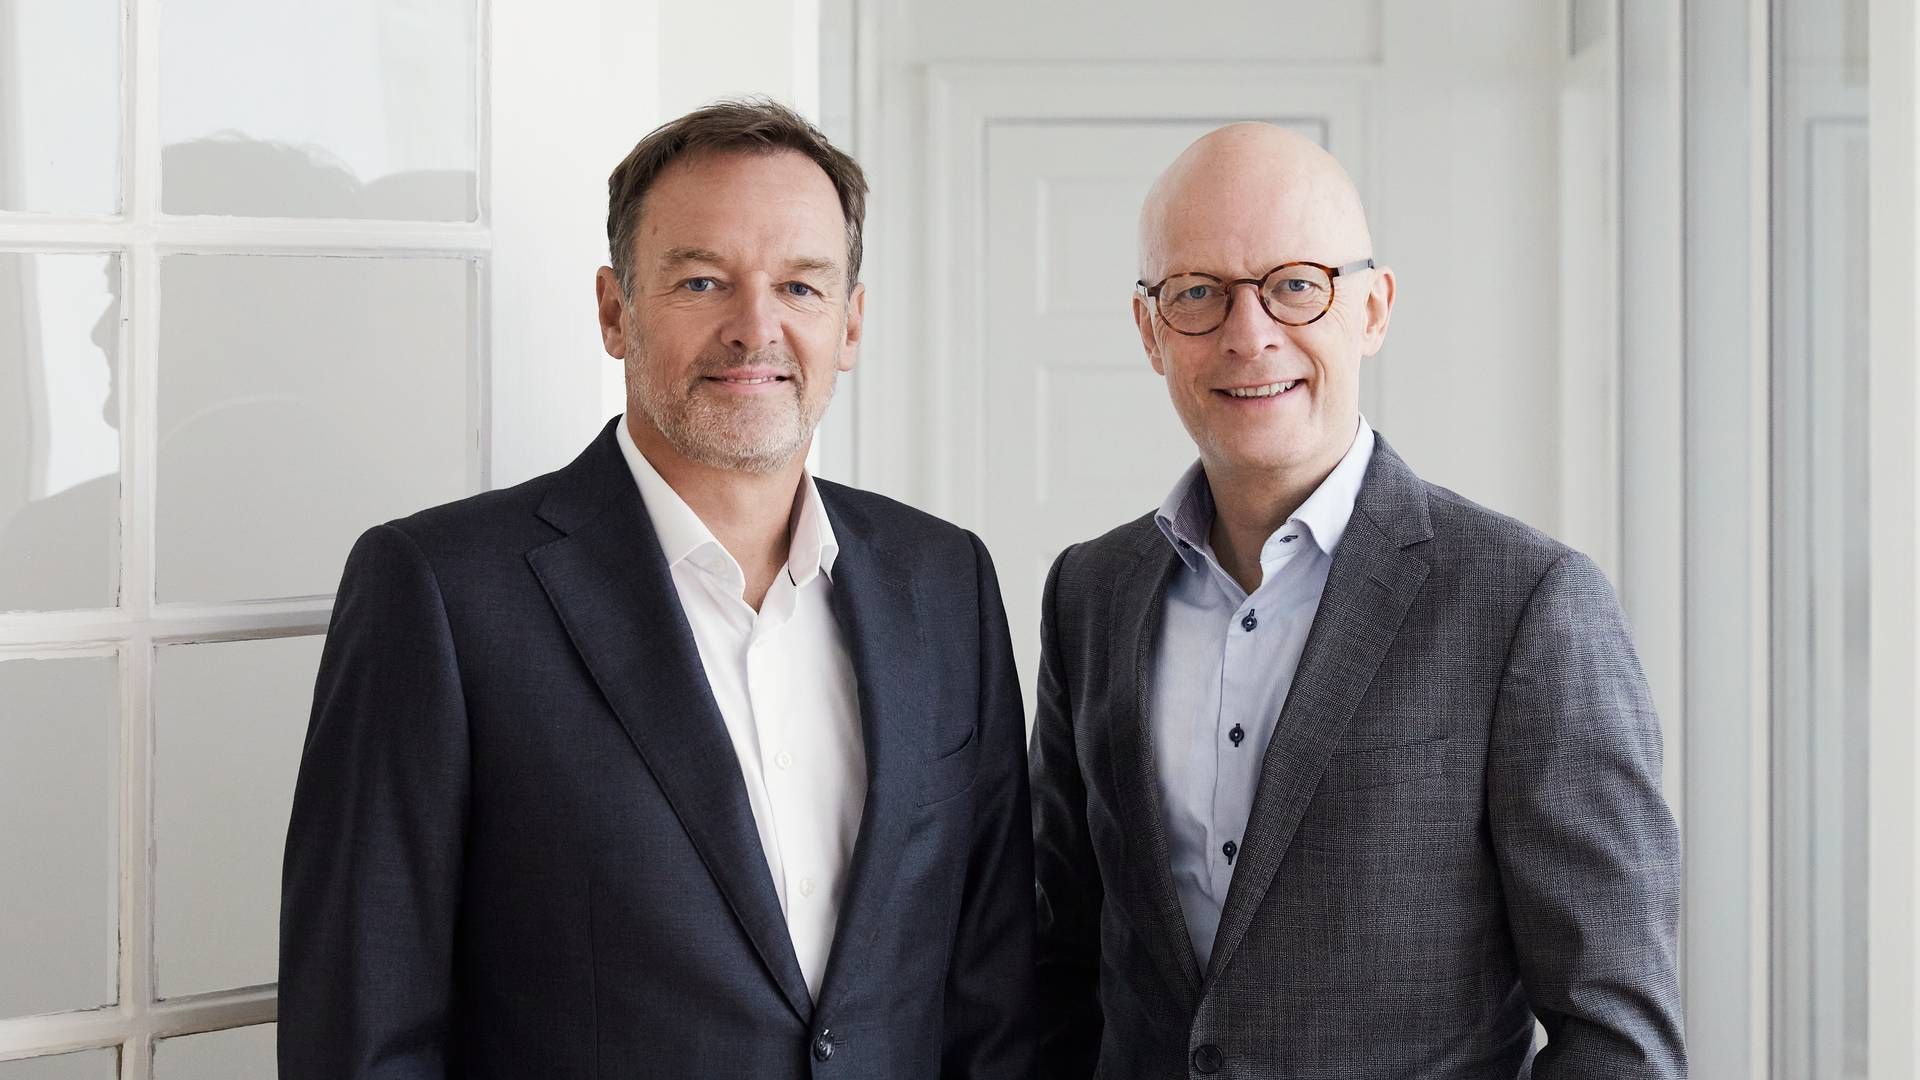 Henrik Budde Gantzel (left) is new director of Institutional clients at Storebrand in Denmark, which is led by Kim T. Andreassen. | Photo: PR / Storebrand